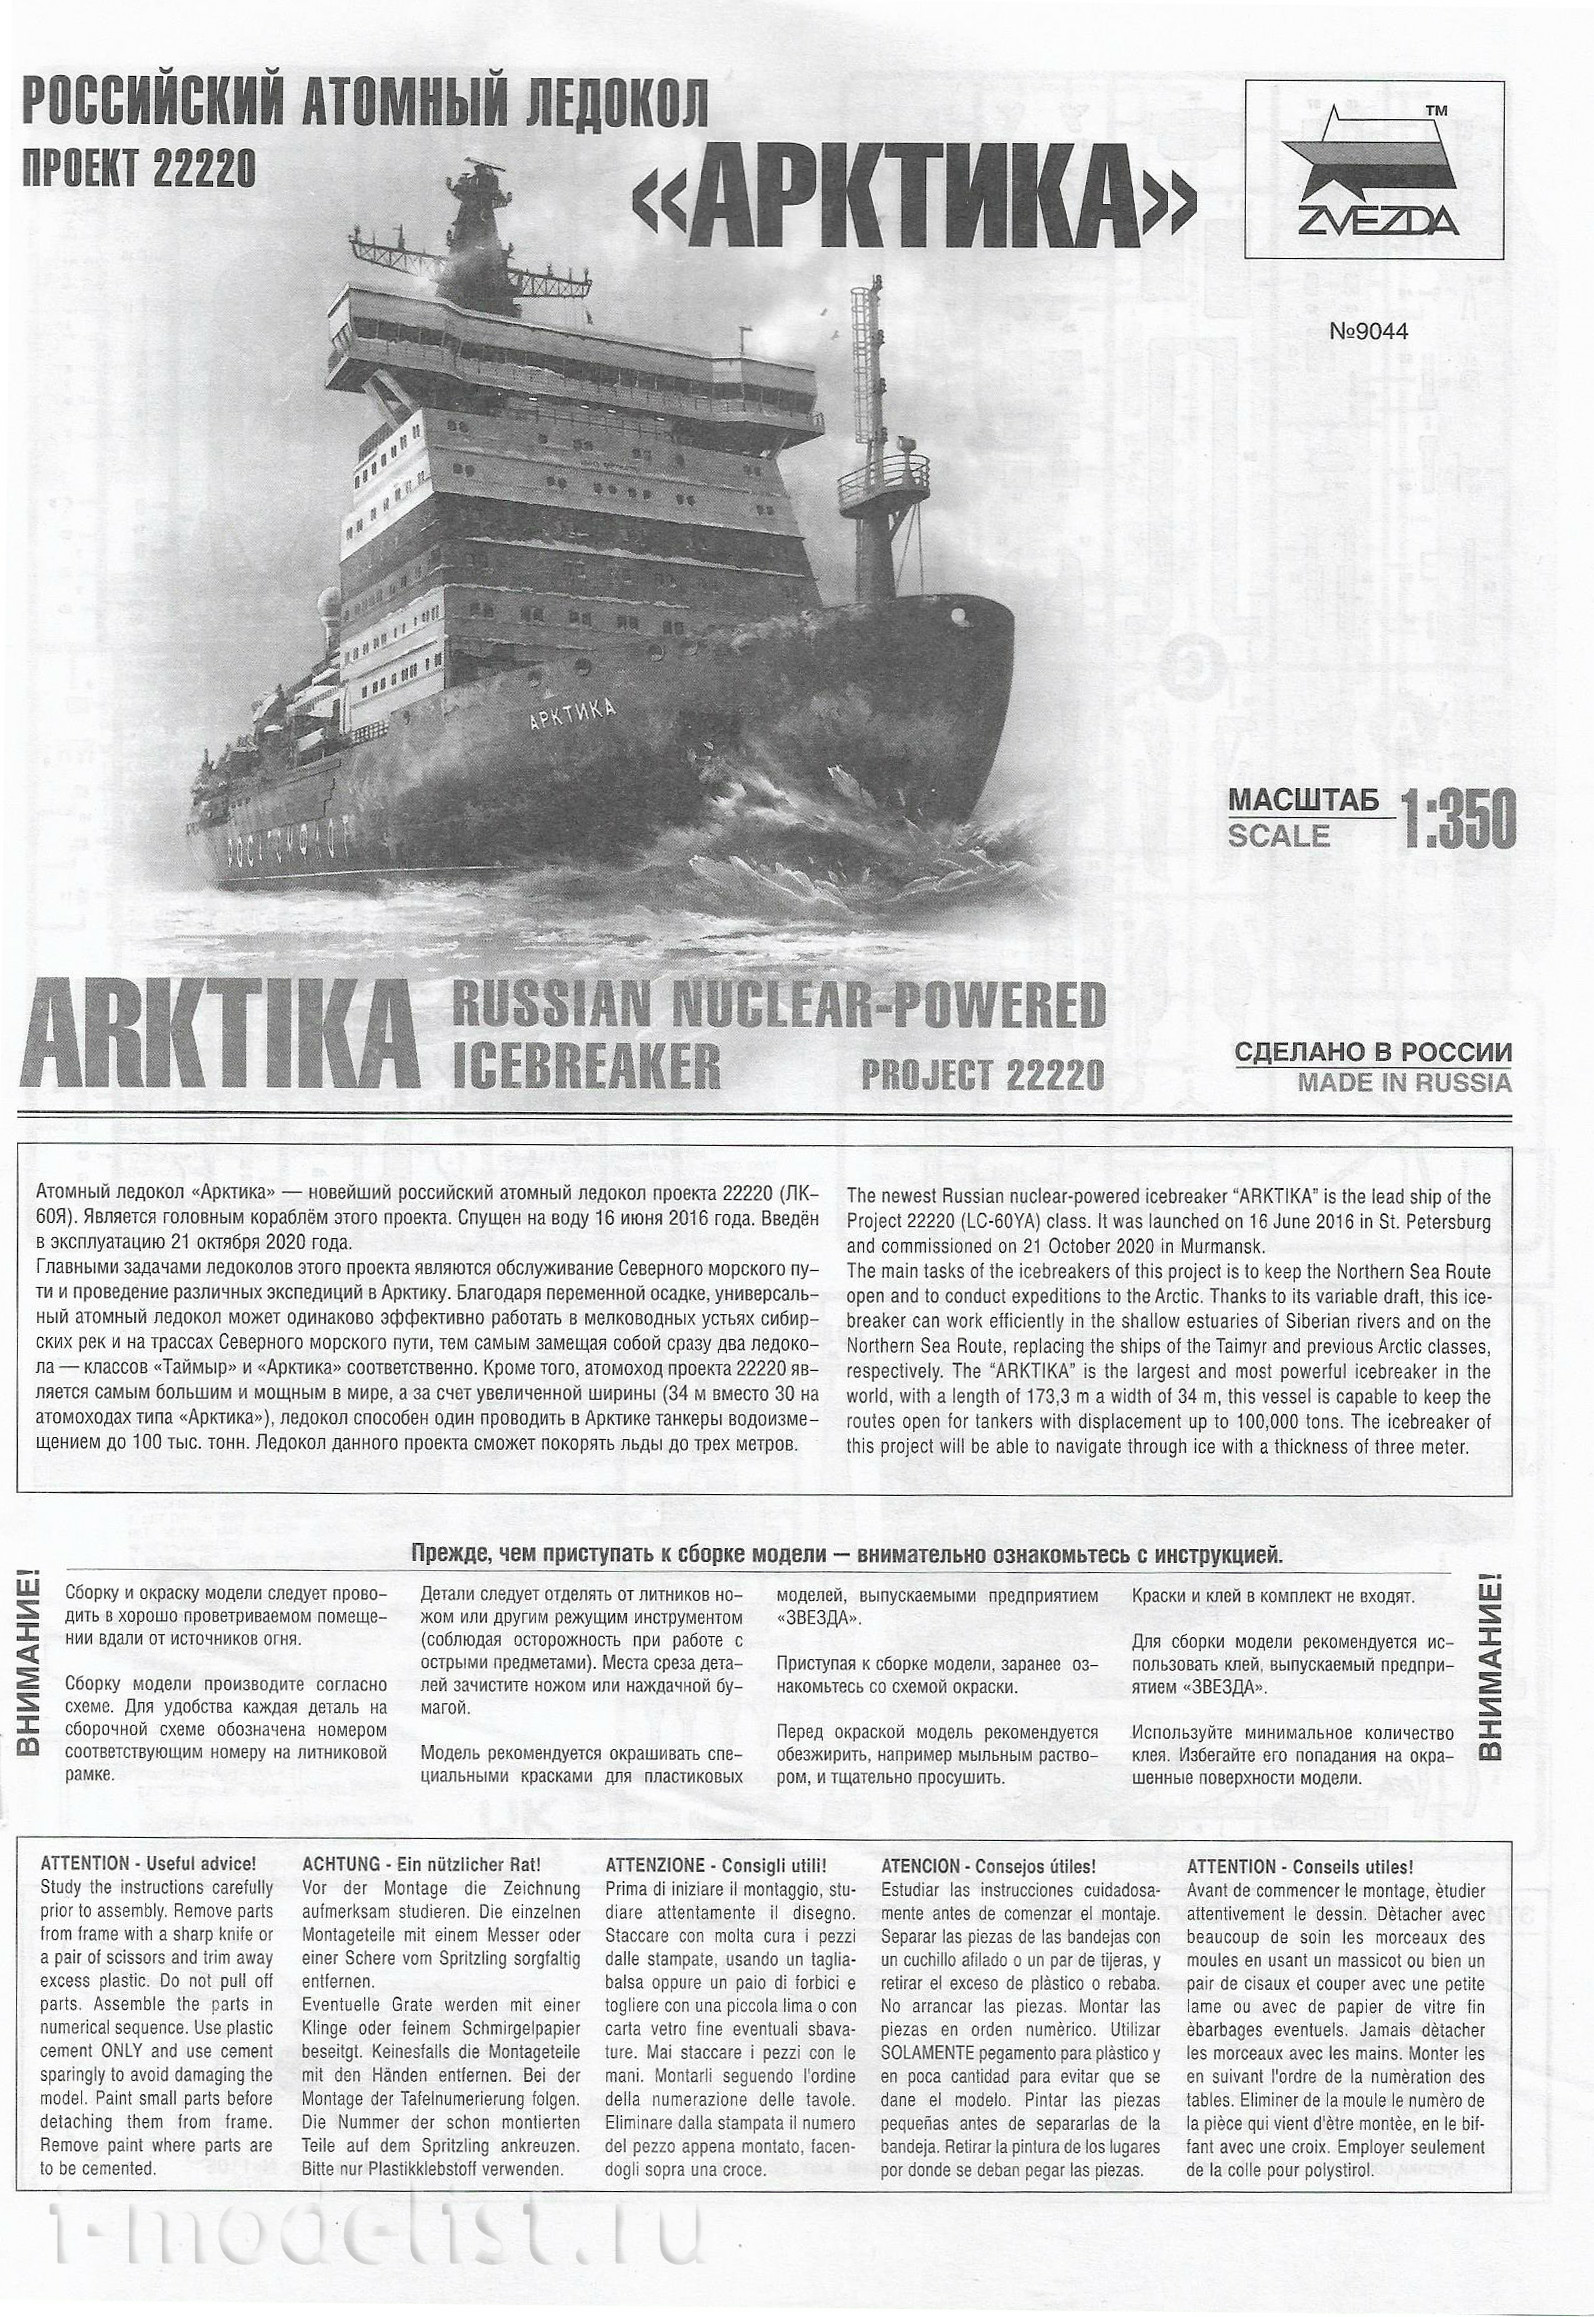 9044 Zvezda 1/350 Russian nuclear icebreaker 